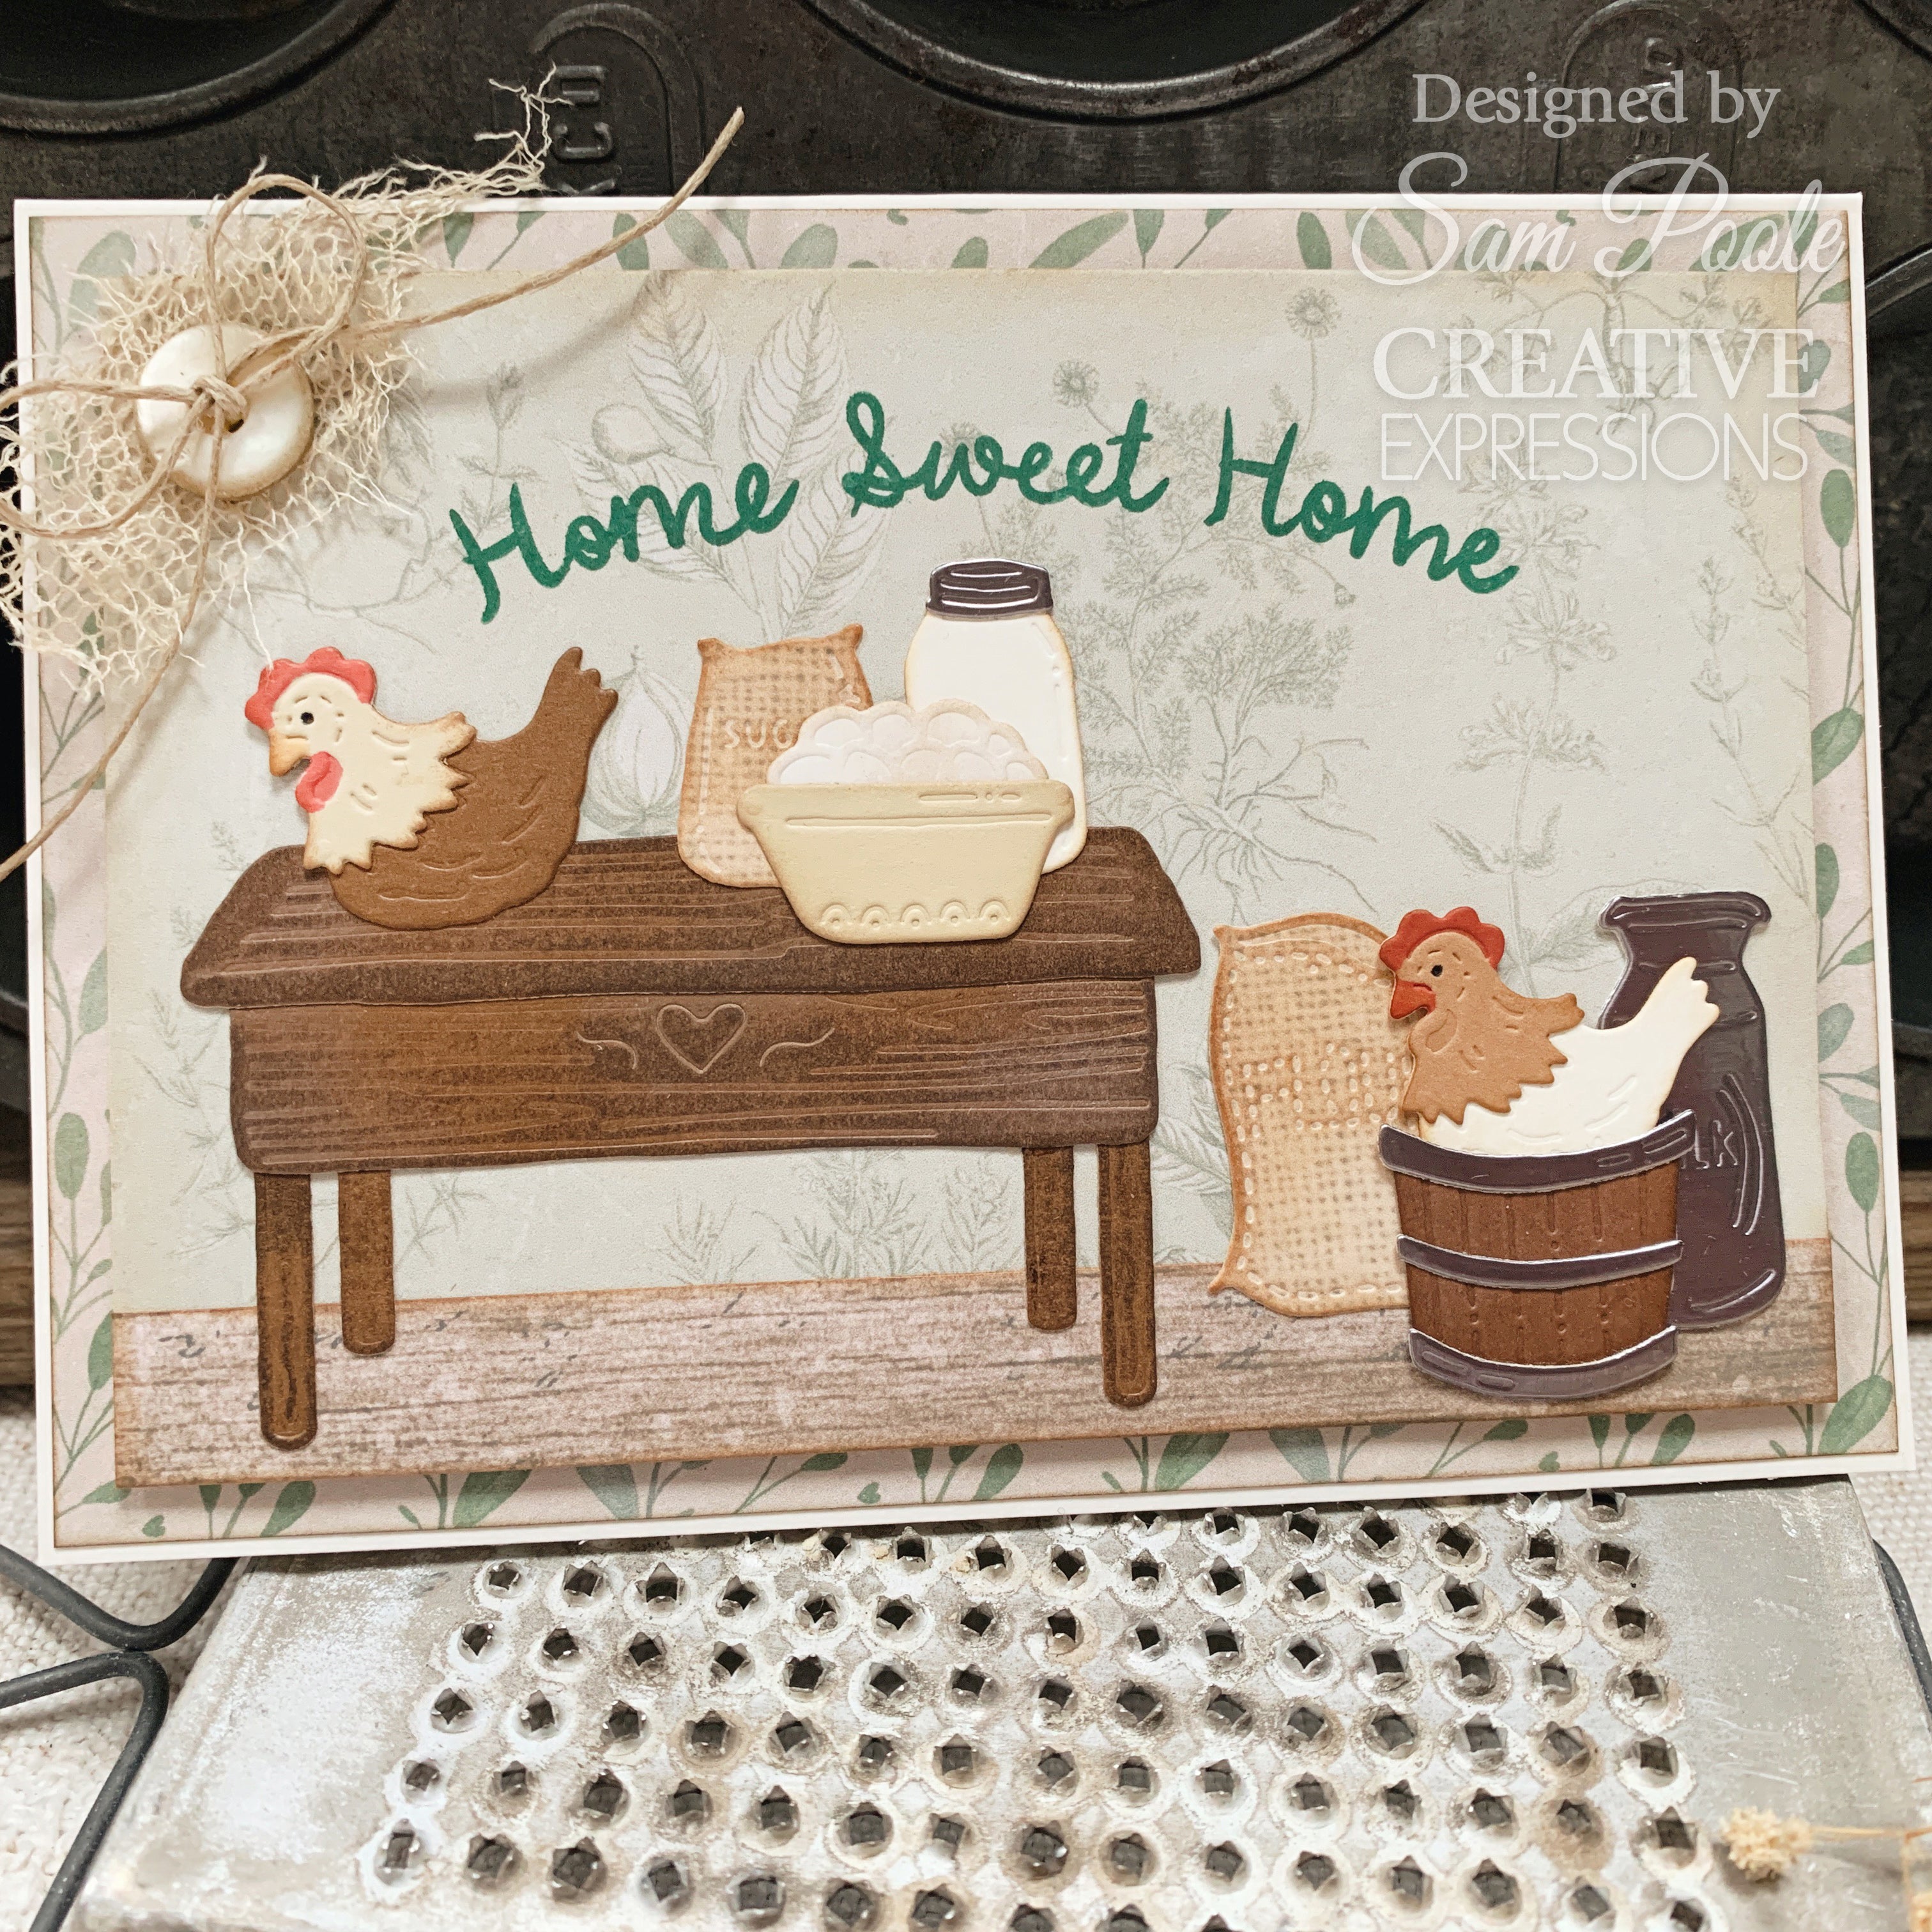 Creative Expressions Sam Poole Rustic Homestead Kitchen Shelf Craft Die